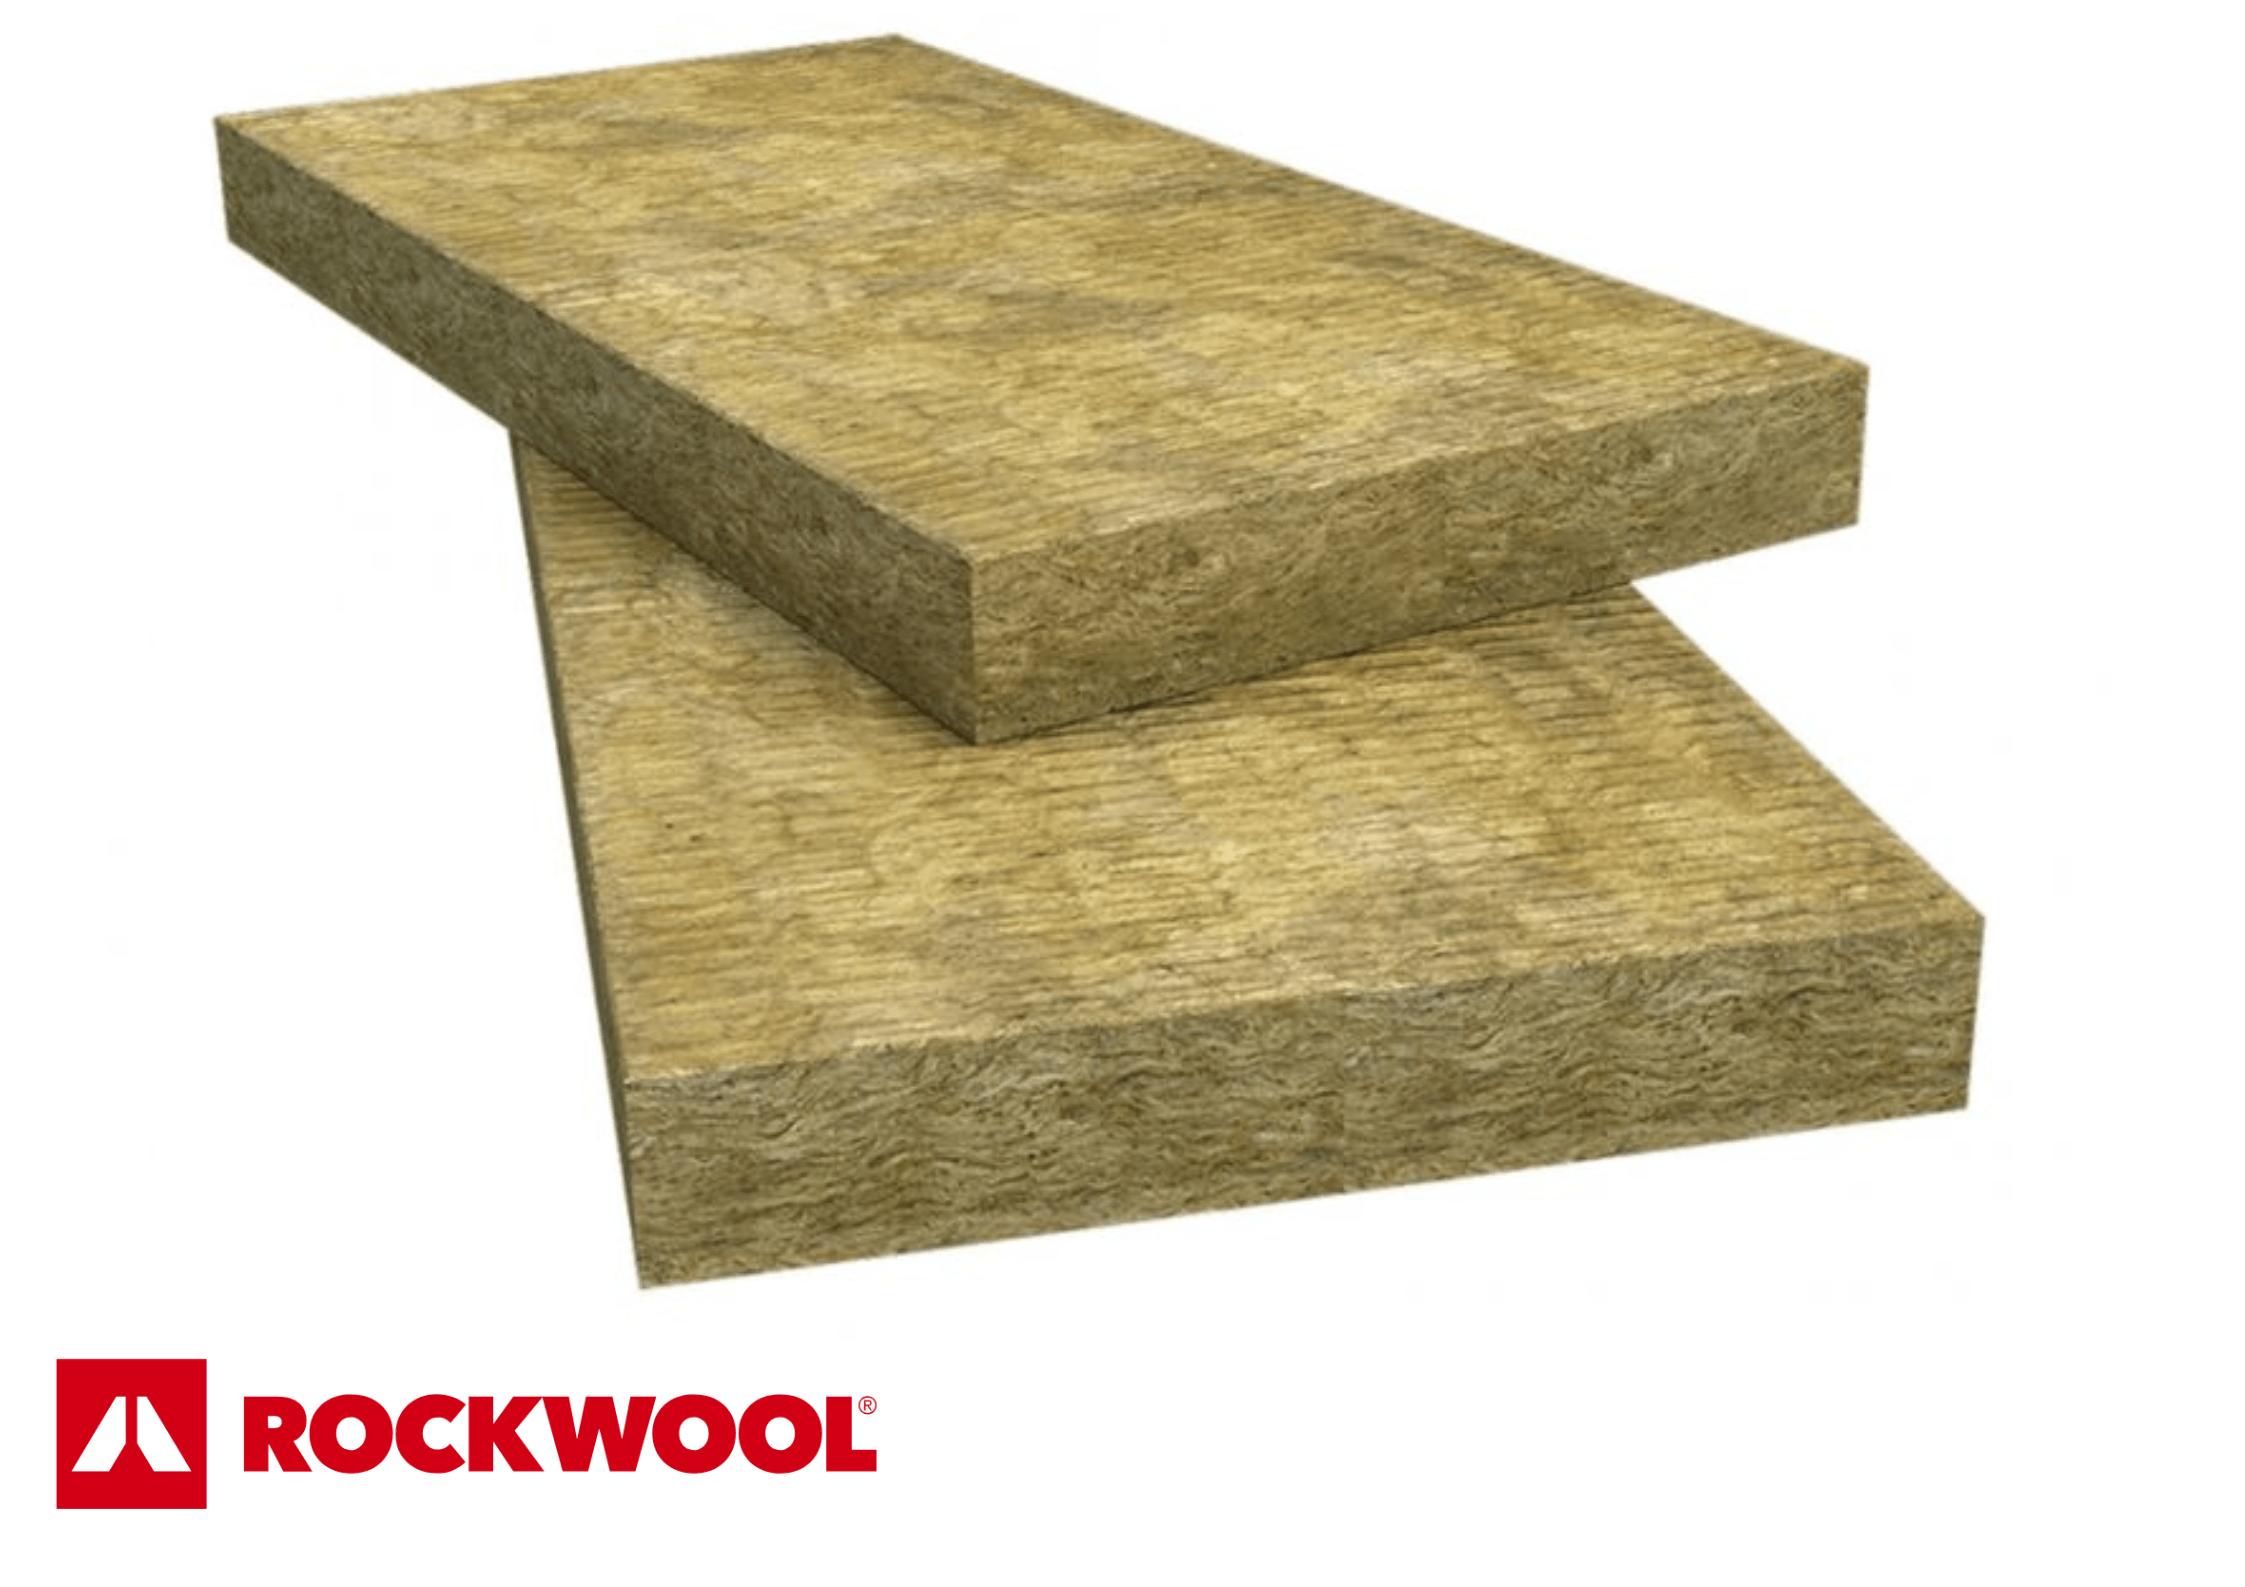 Rockwool Rockwool RW5 Insulation Slab | 1200mm x 600mm